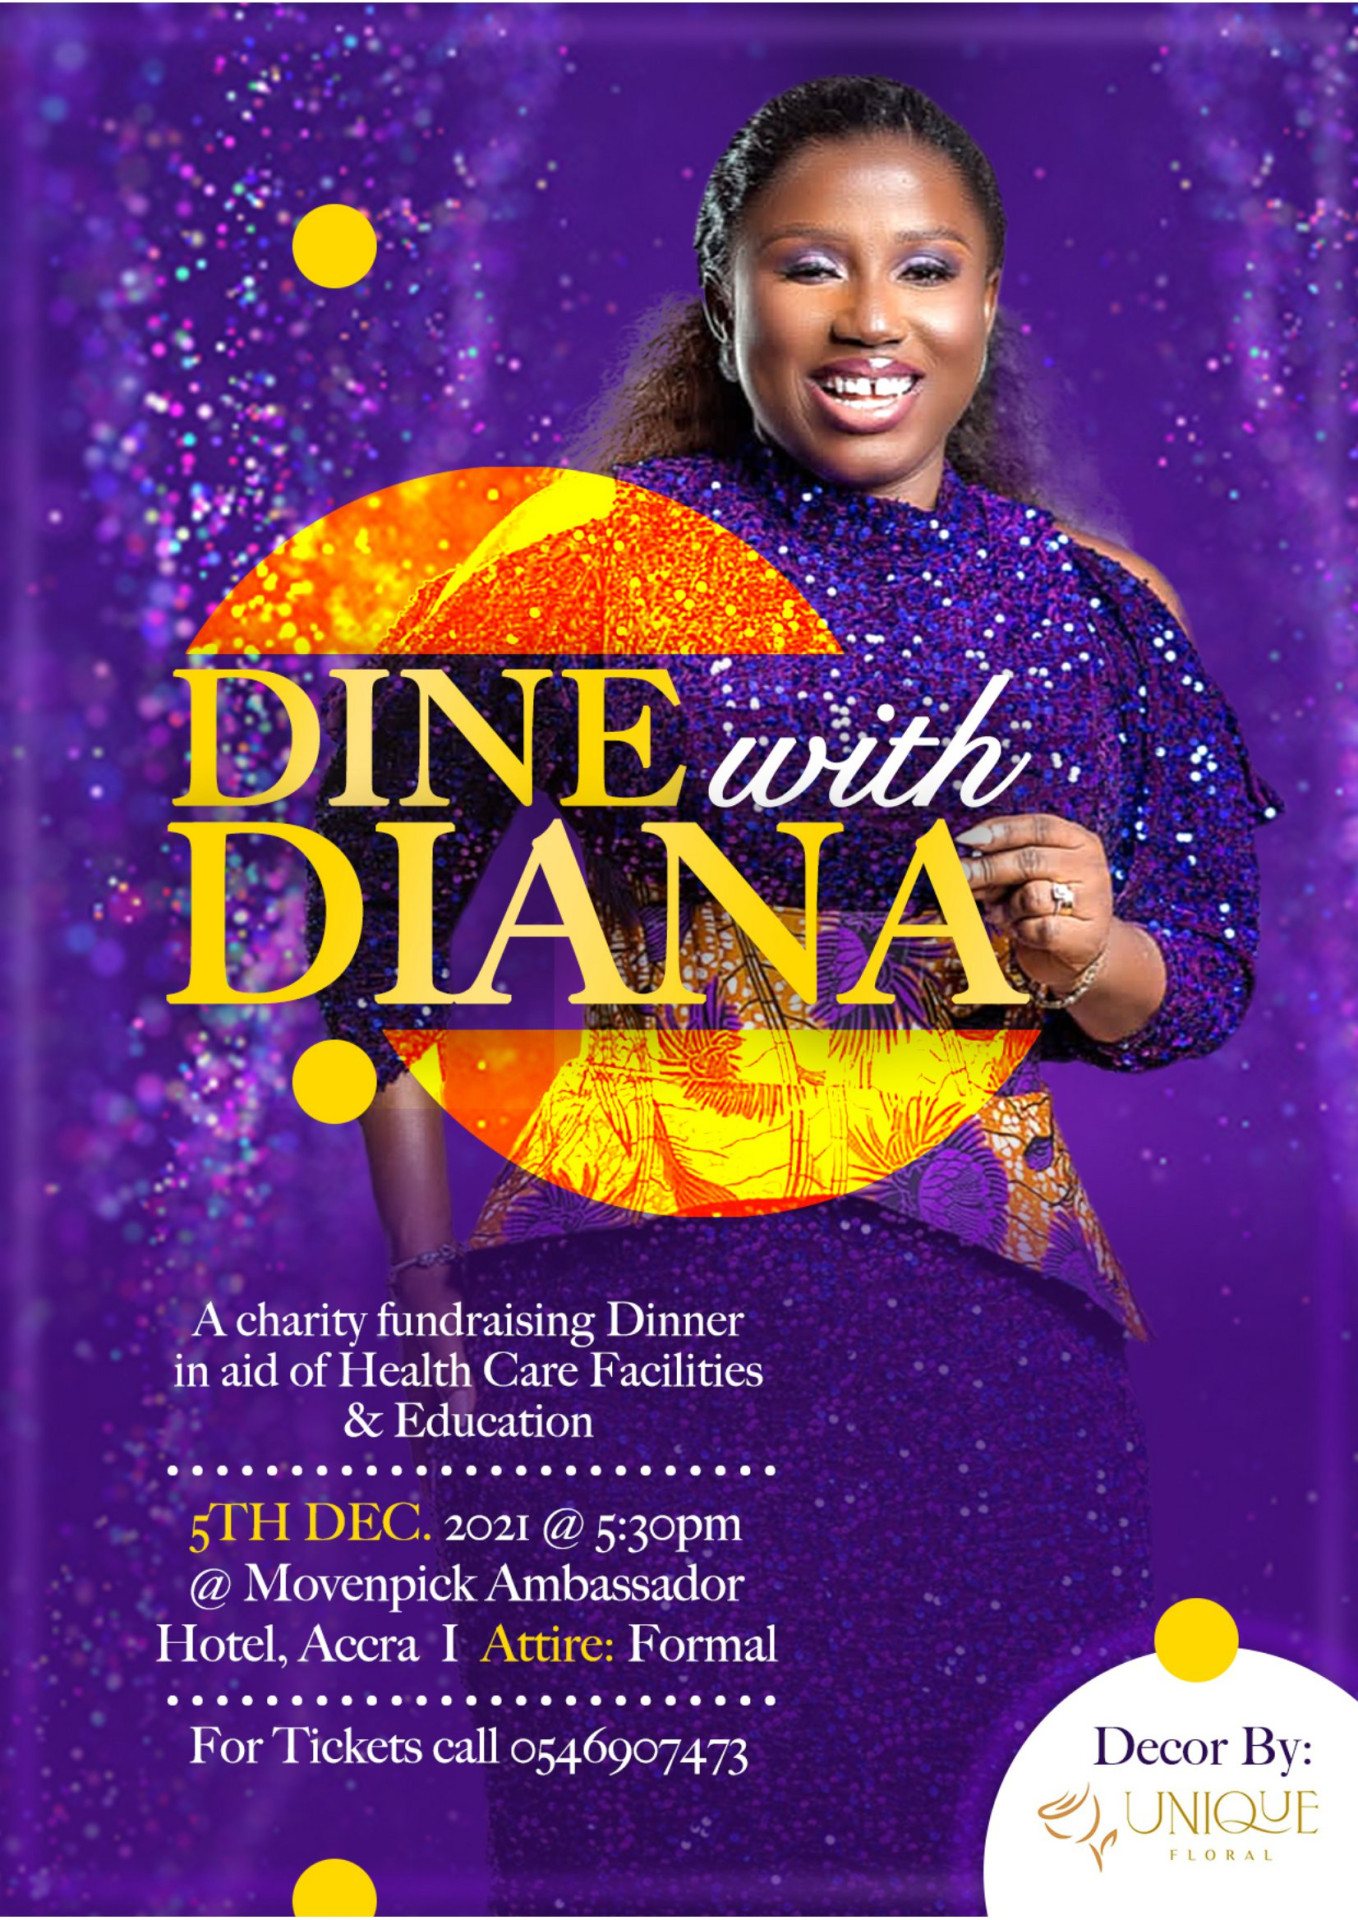 Event Flyer for Client: Diana Hamilton, a multiple award winning Ghanaian Gospel Artist based in the UK